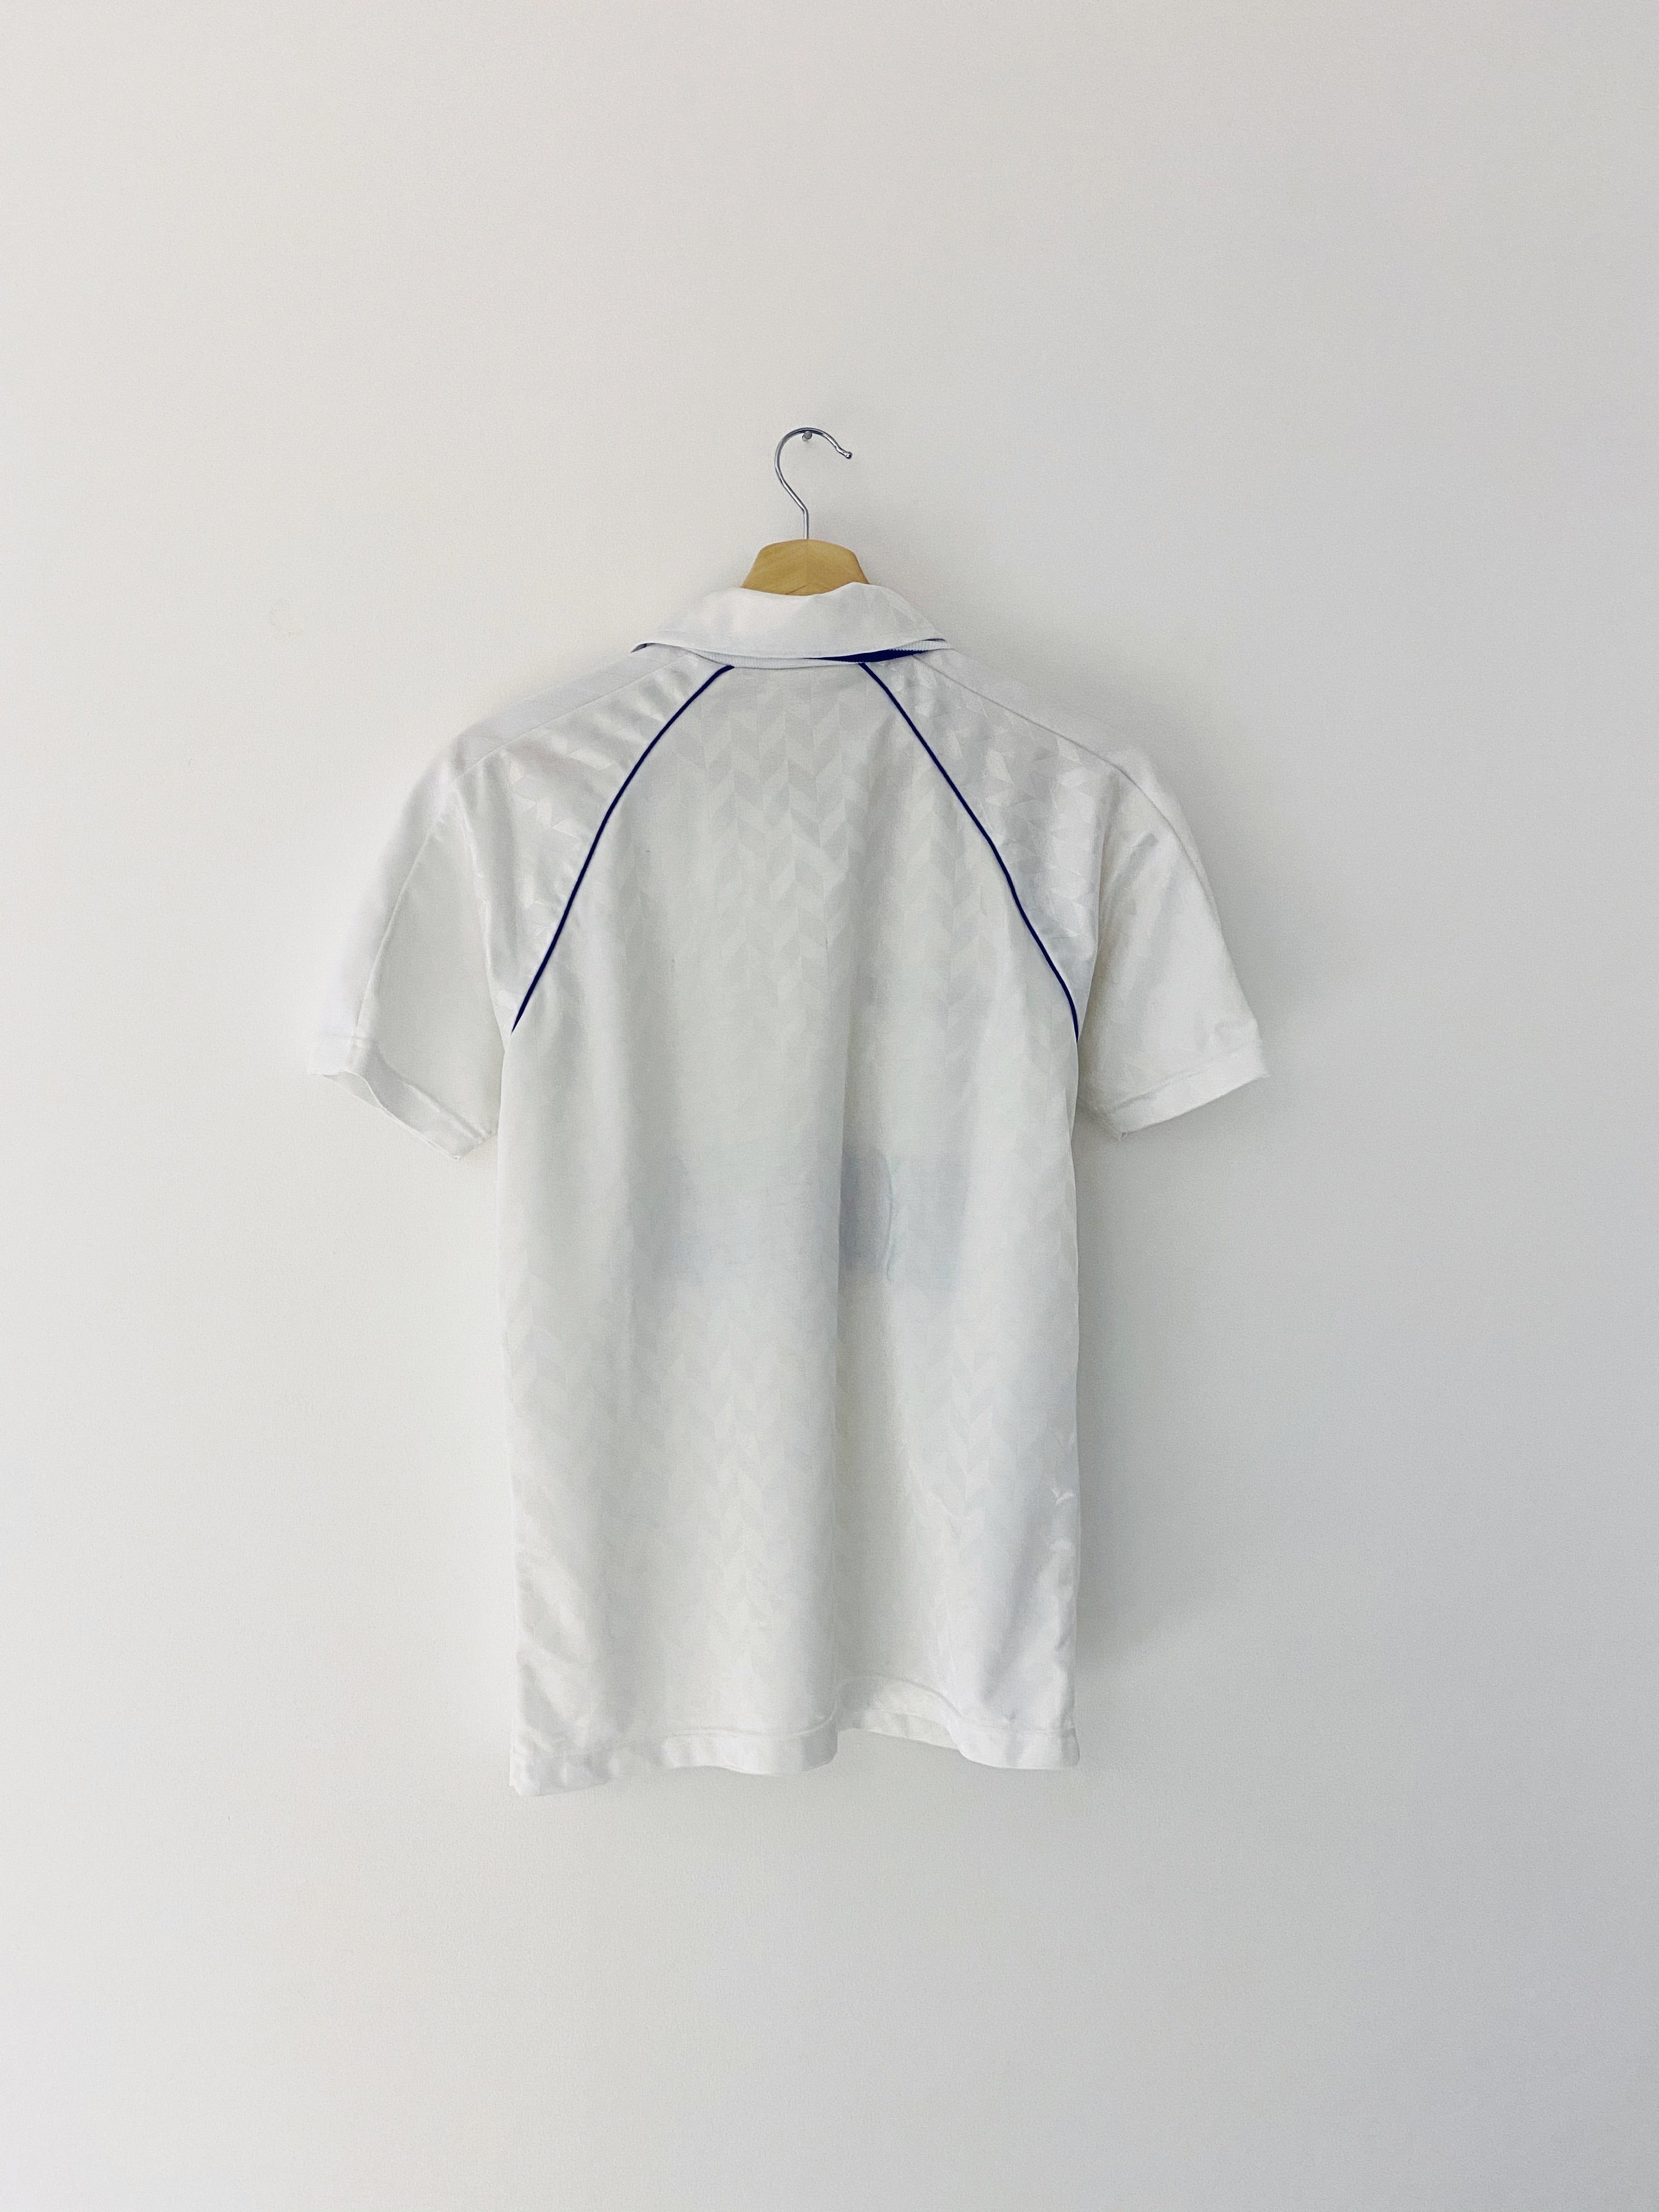 1987/89 Tottenham Hotspur Home Shirt (Y) 6/10